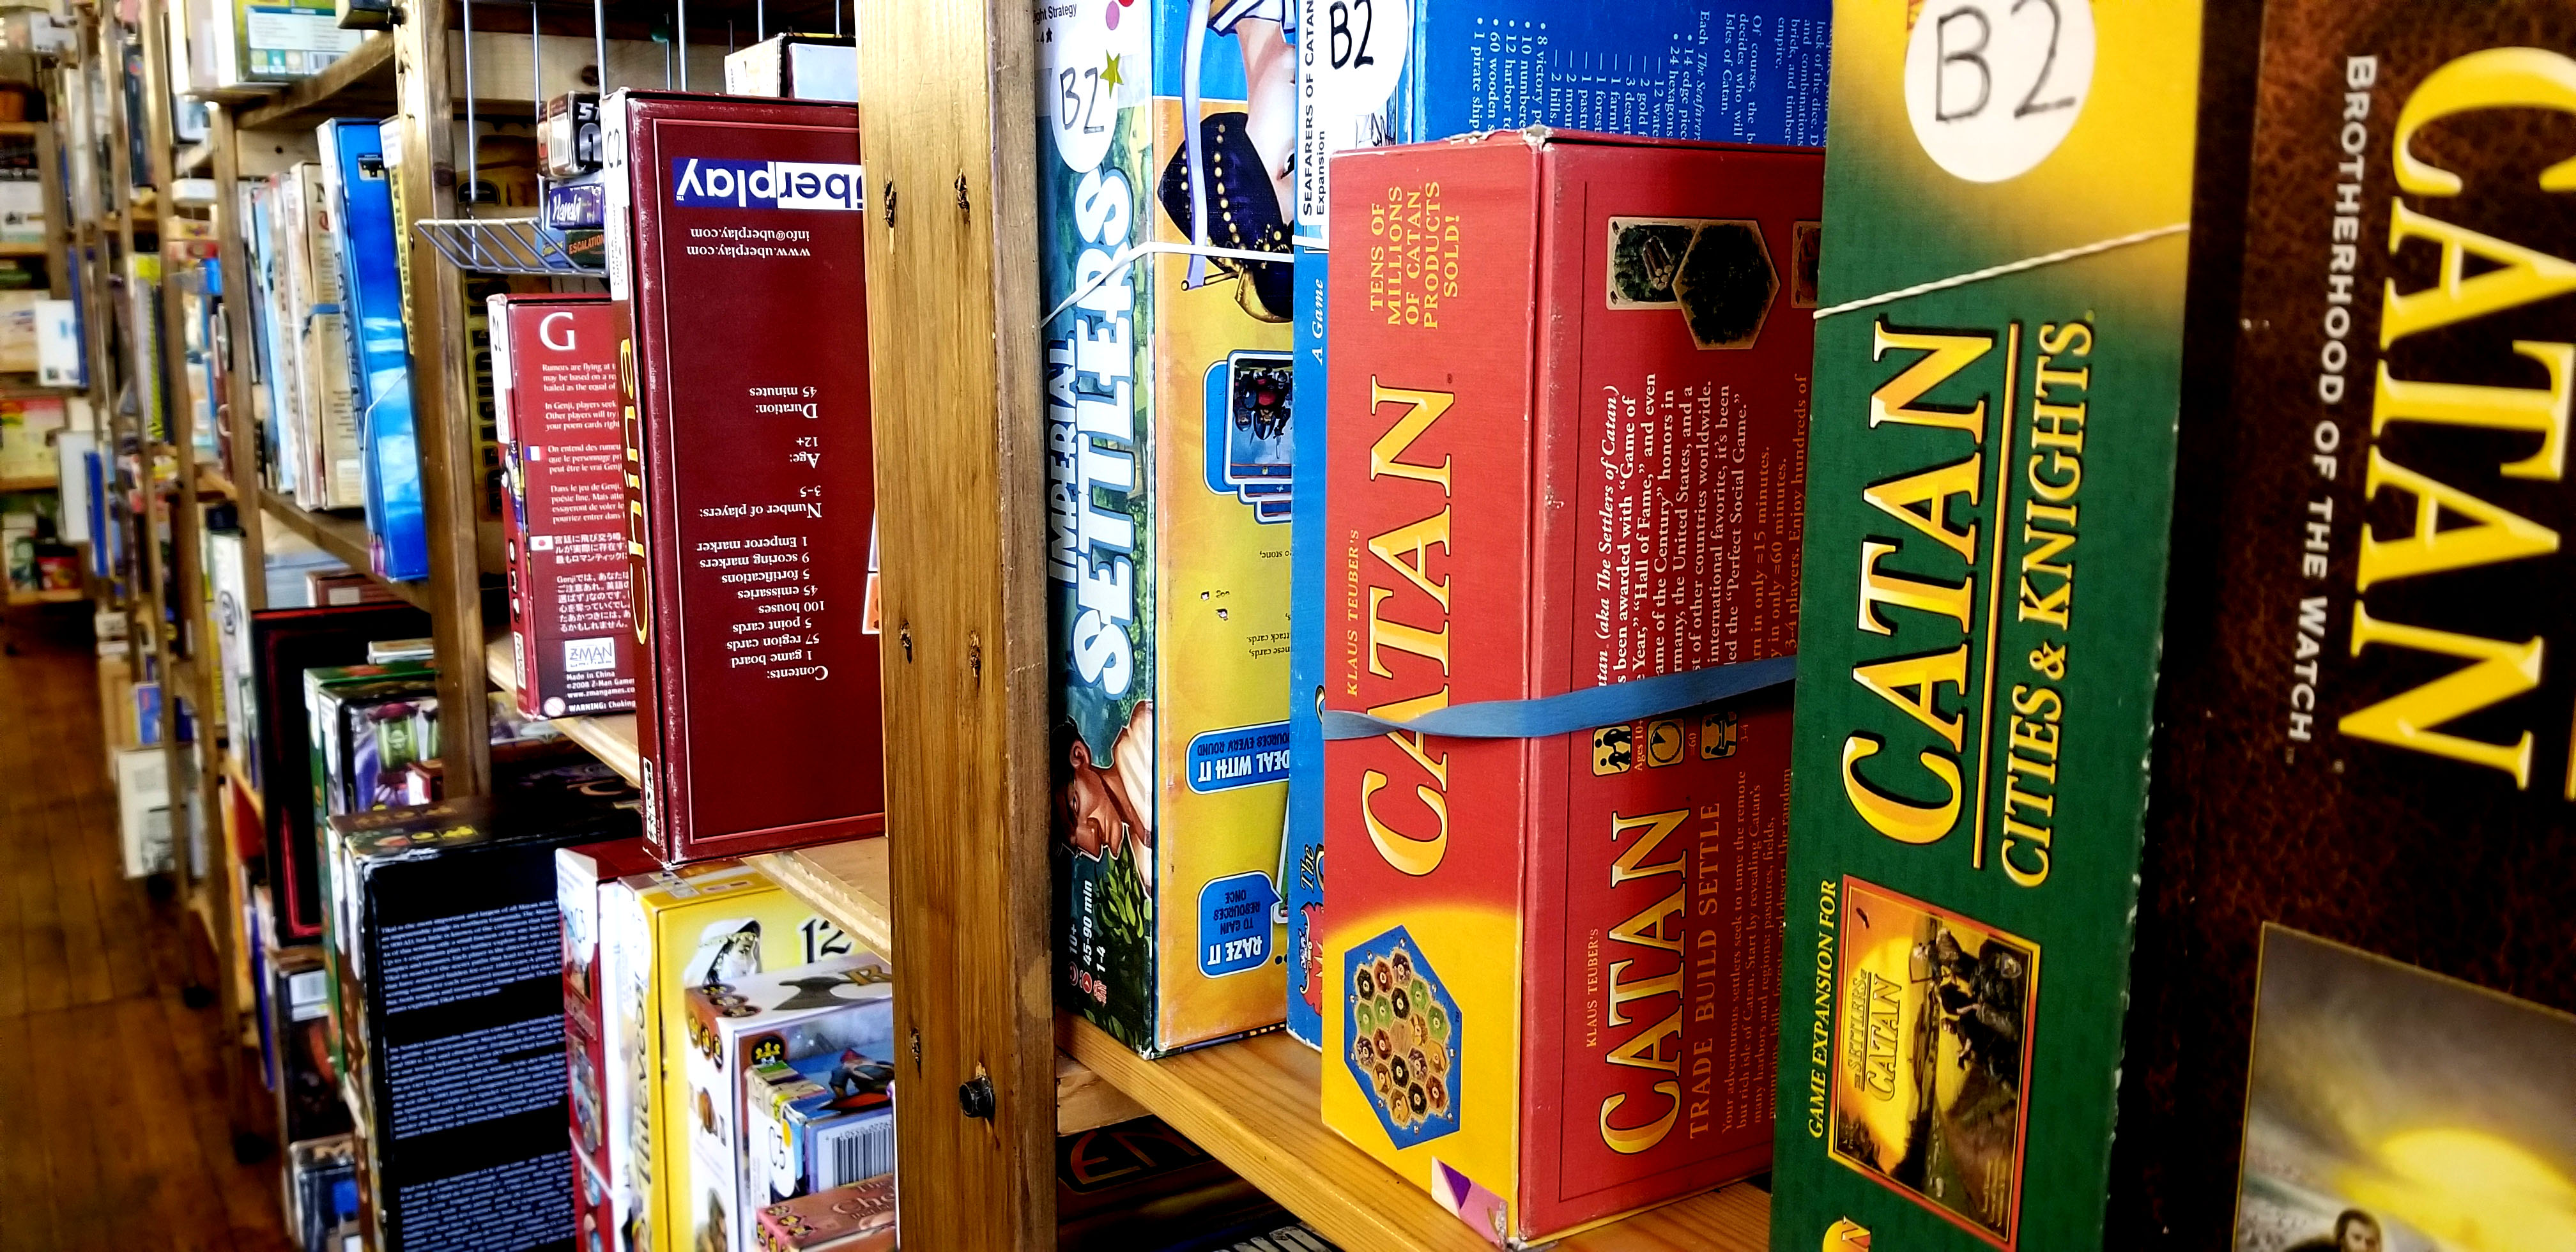 A shelf of board games